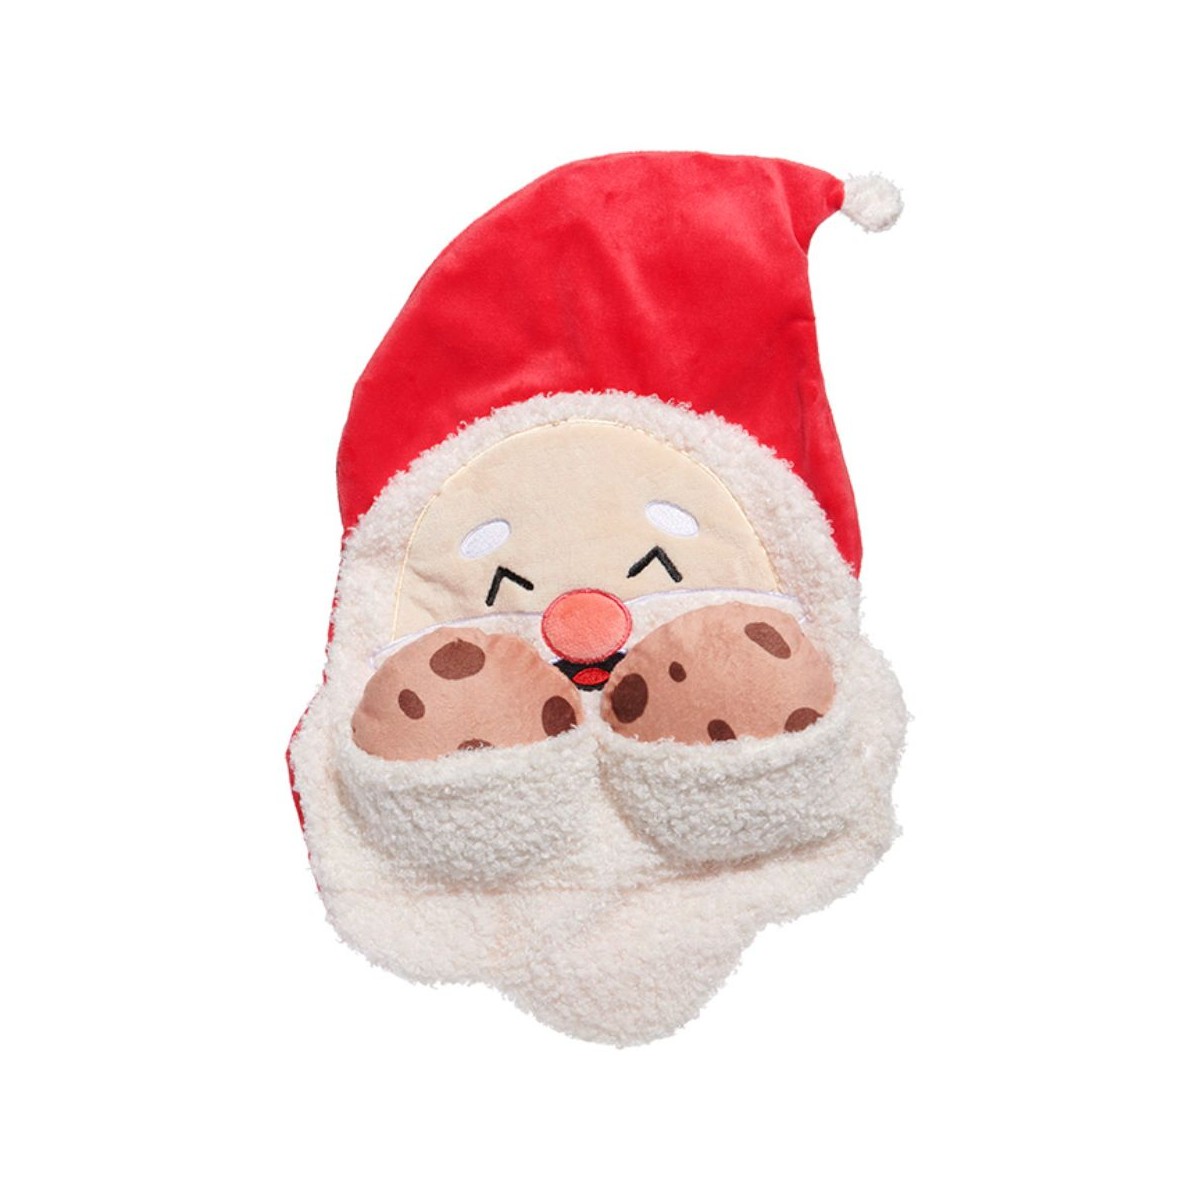 BARK Holiday Plush Dog Toy - Kris Krumble 